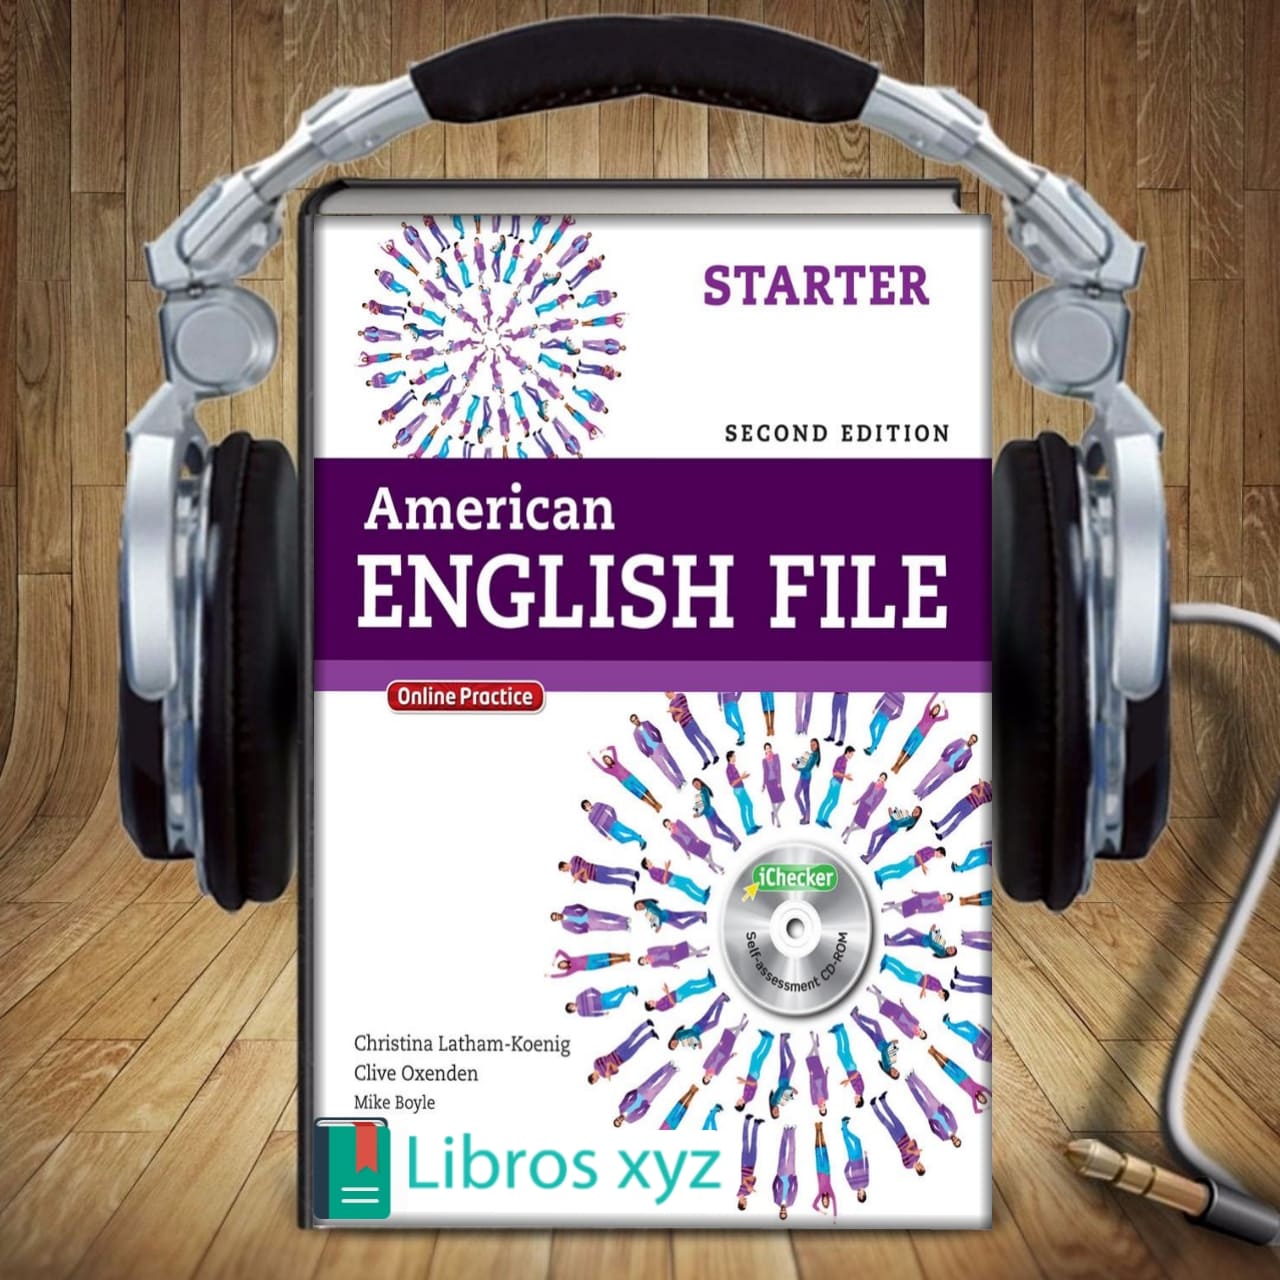 Audiolibro American English File Starter aprender inglés pronunciación como nativo